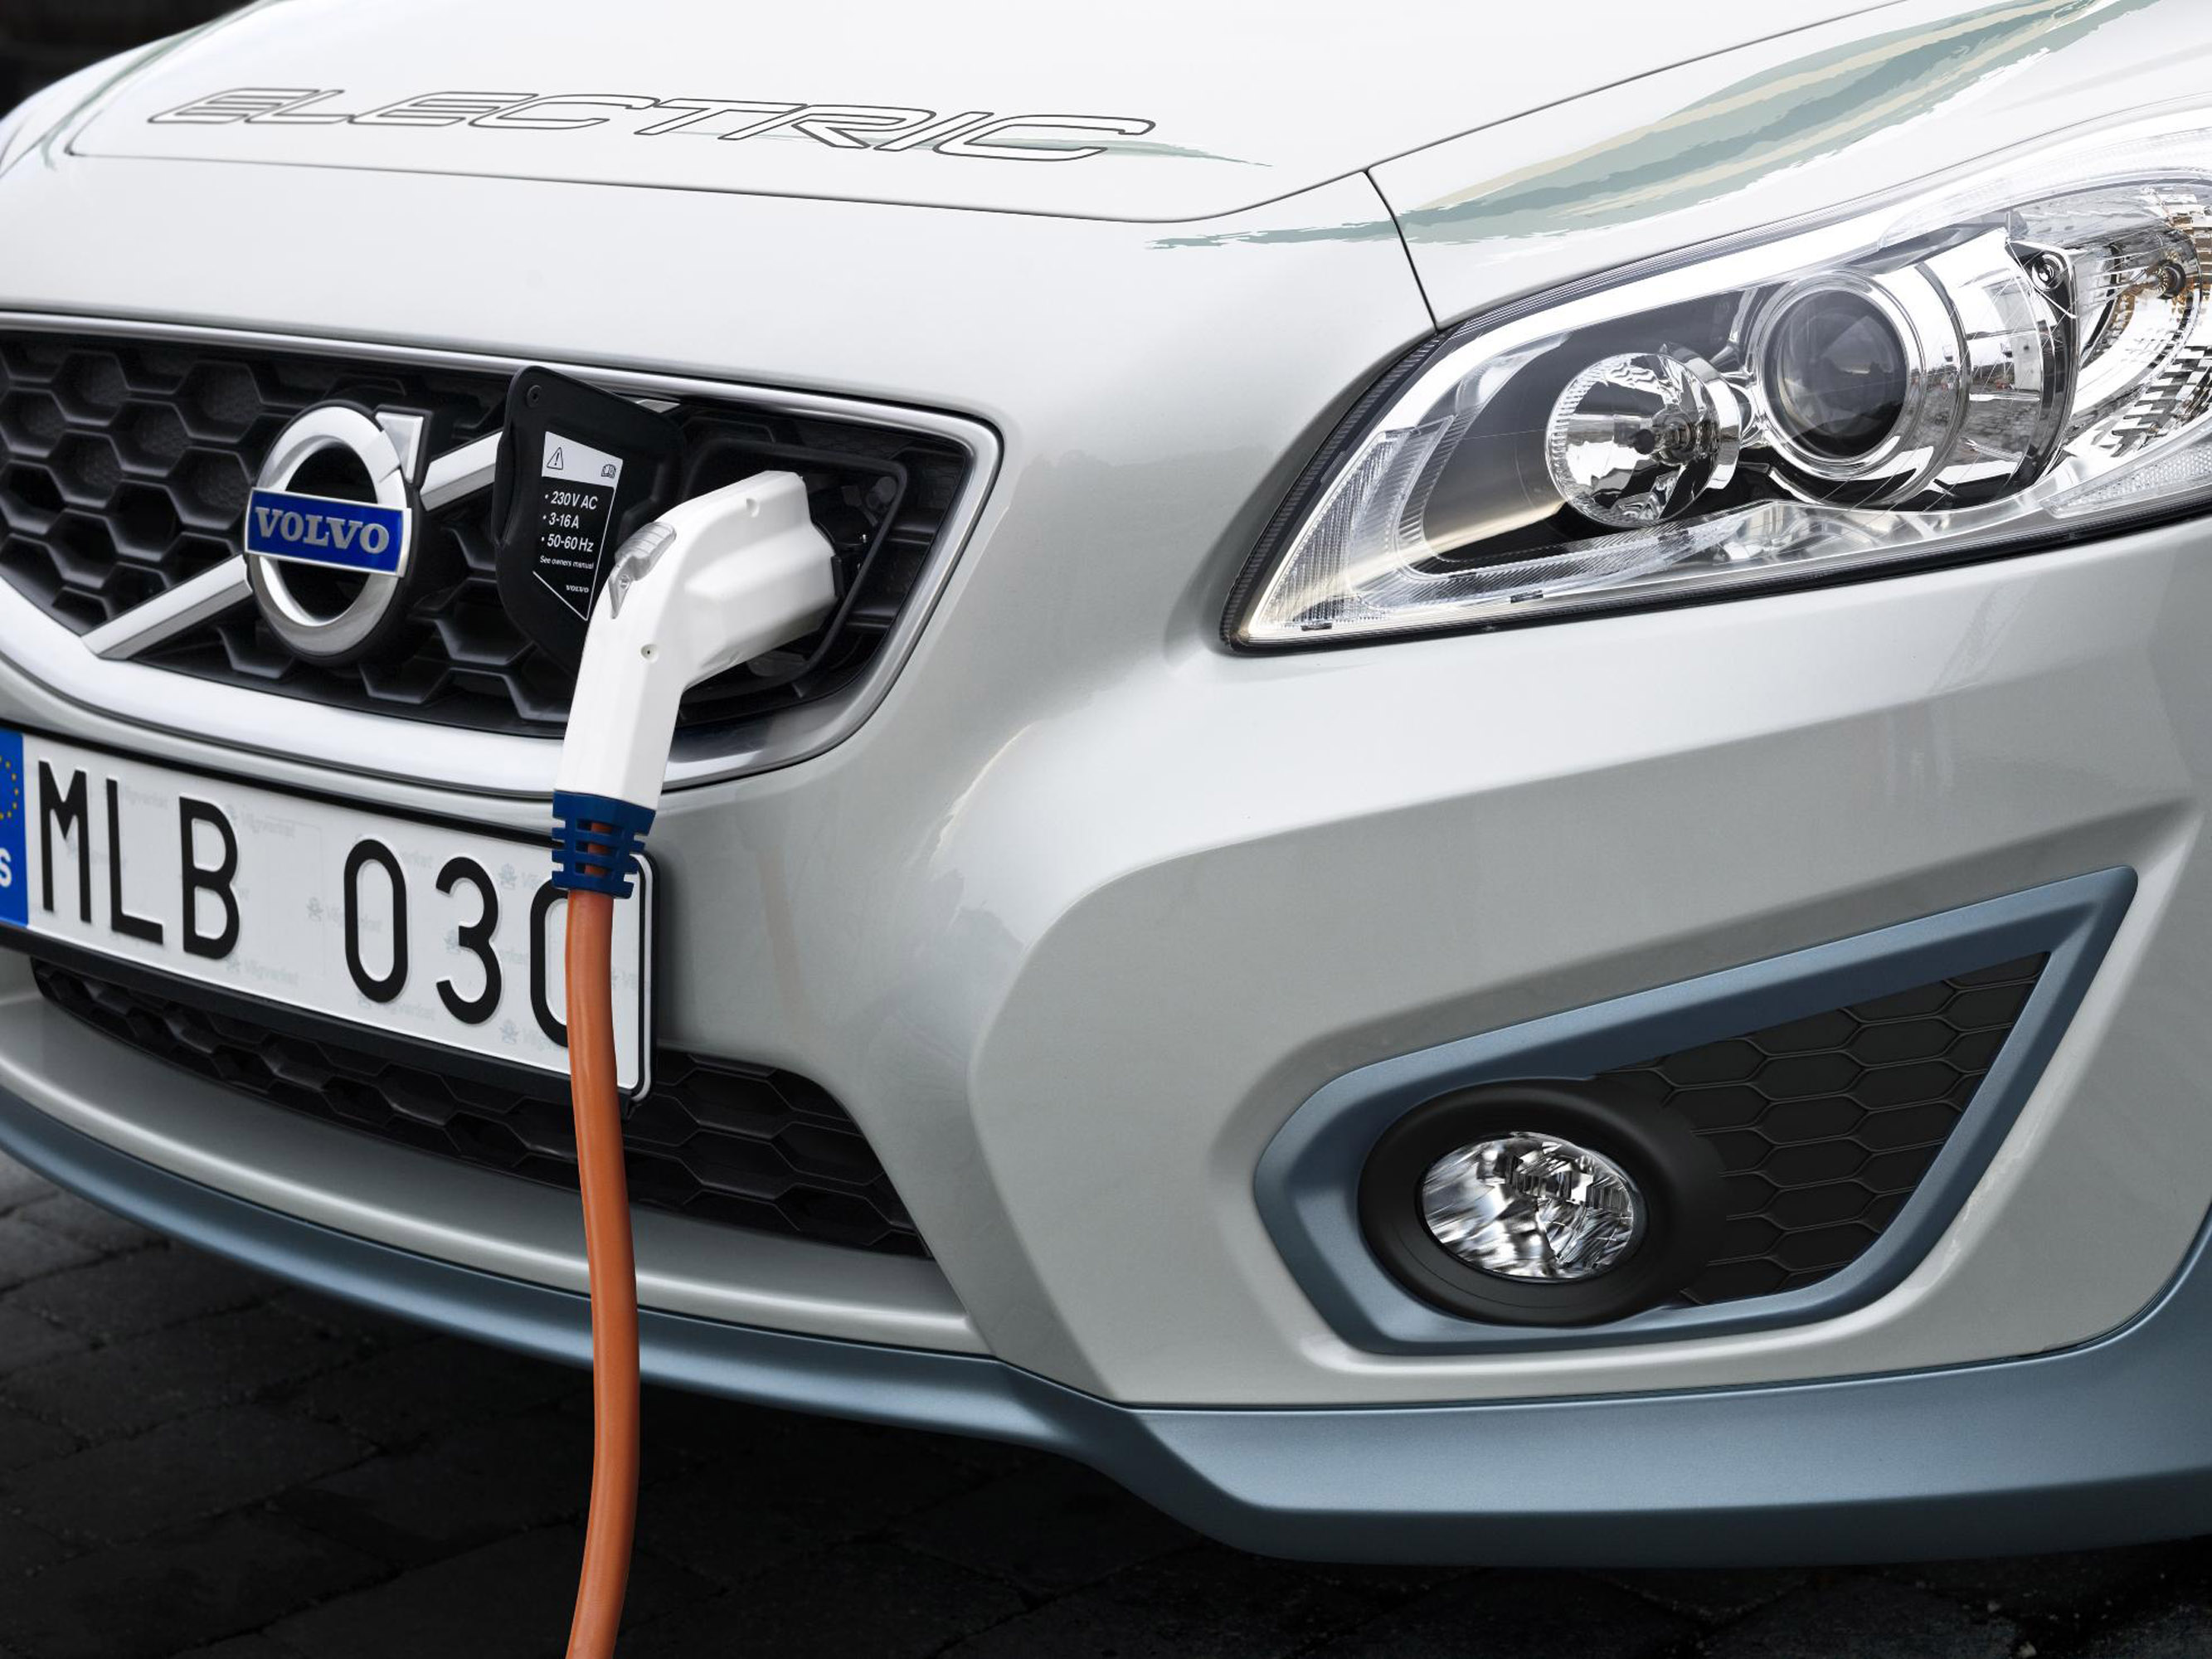 Volvo Smart Charging Concept